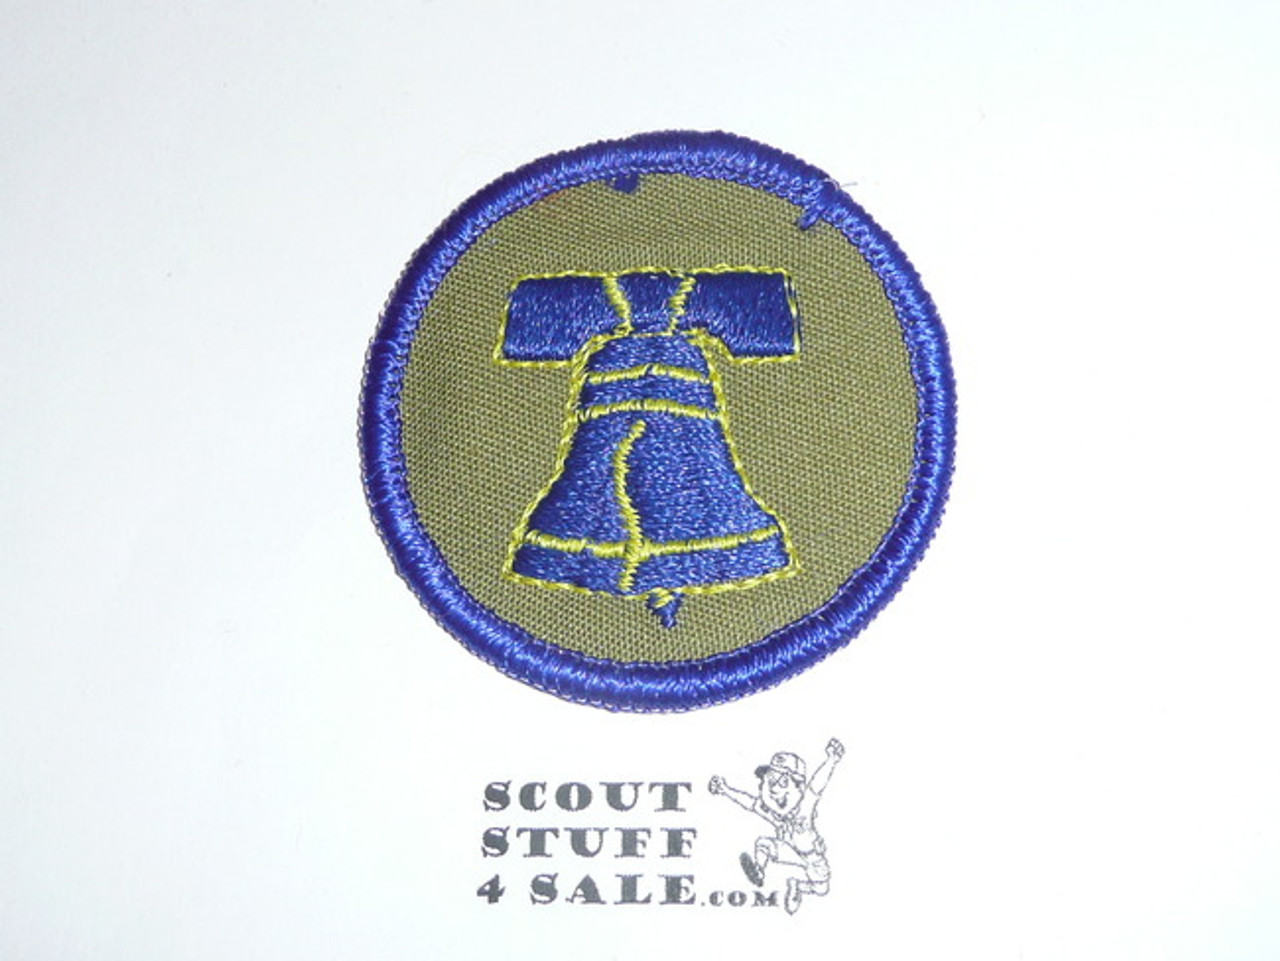 Liberty Bell Patrol Medallion, Grey Twill with gauze back, 1972-1989